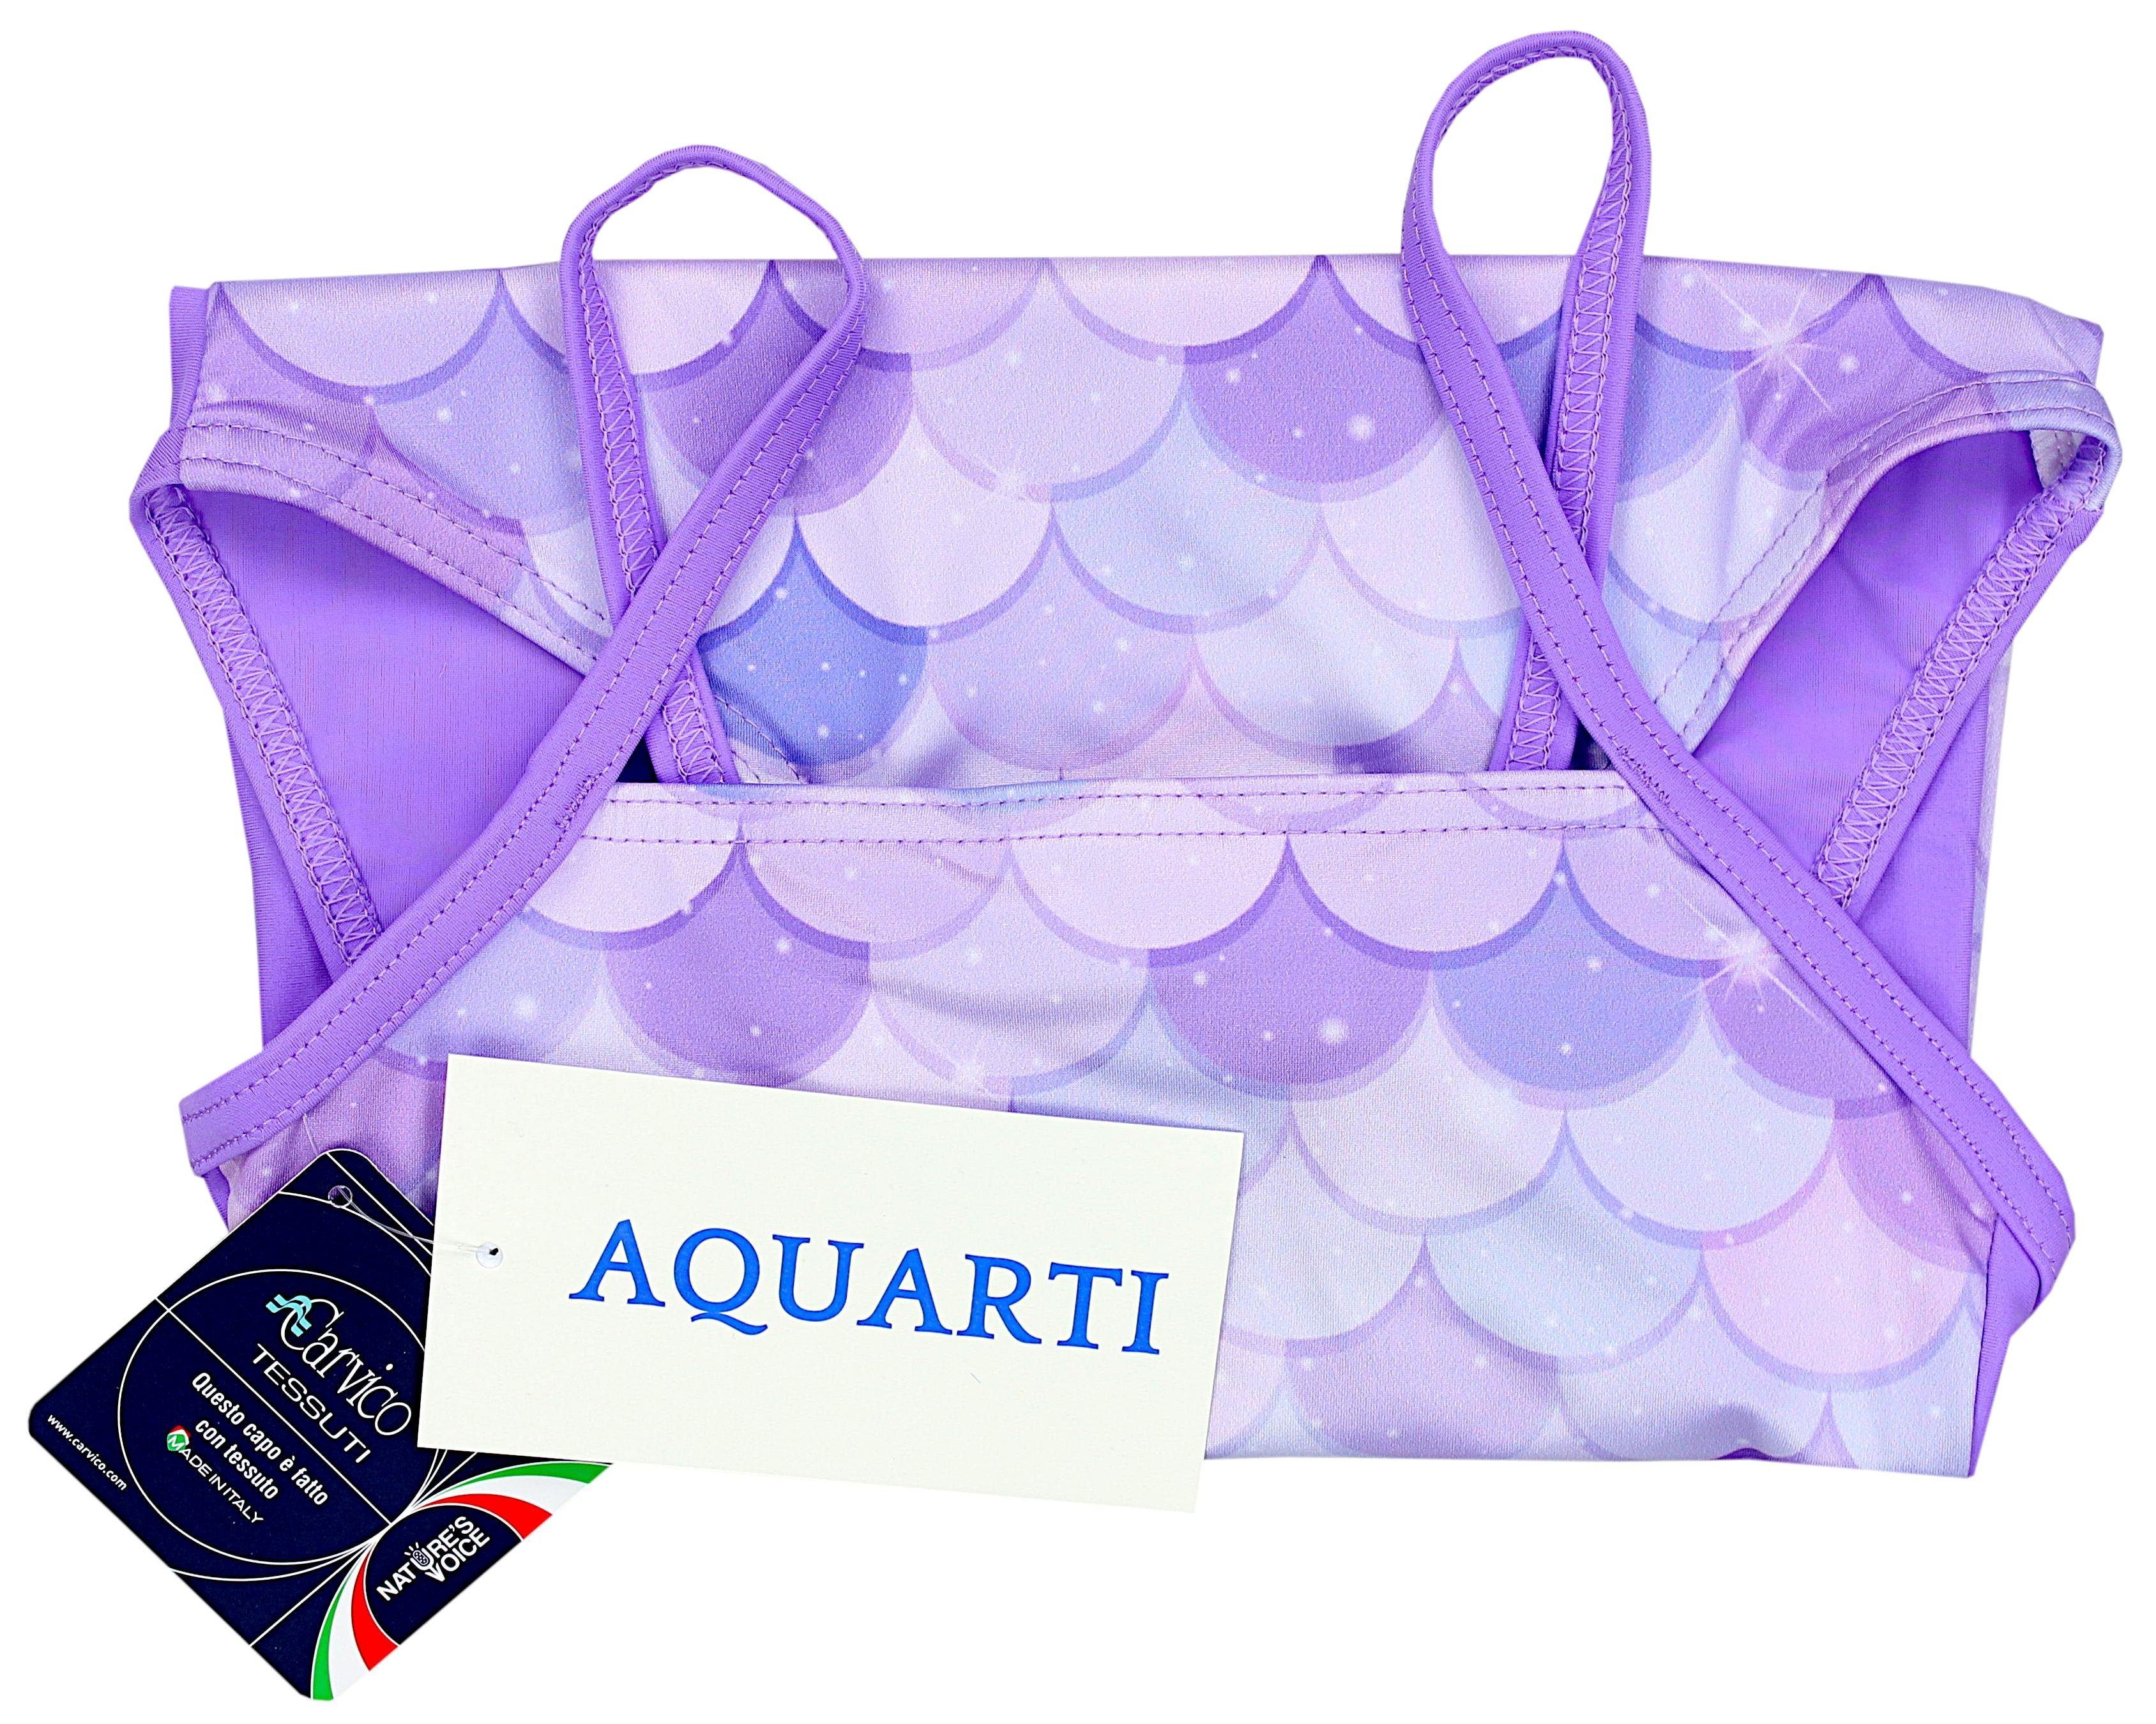 Aquarti Meerjungfrau Badeanzug Spaghettiträgern mit Mädchen Aquarti Badeanzug Violett Streifen / Lila